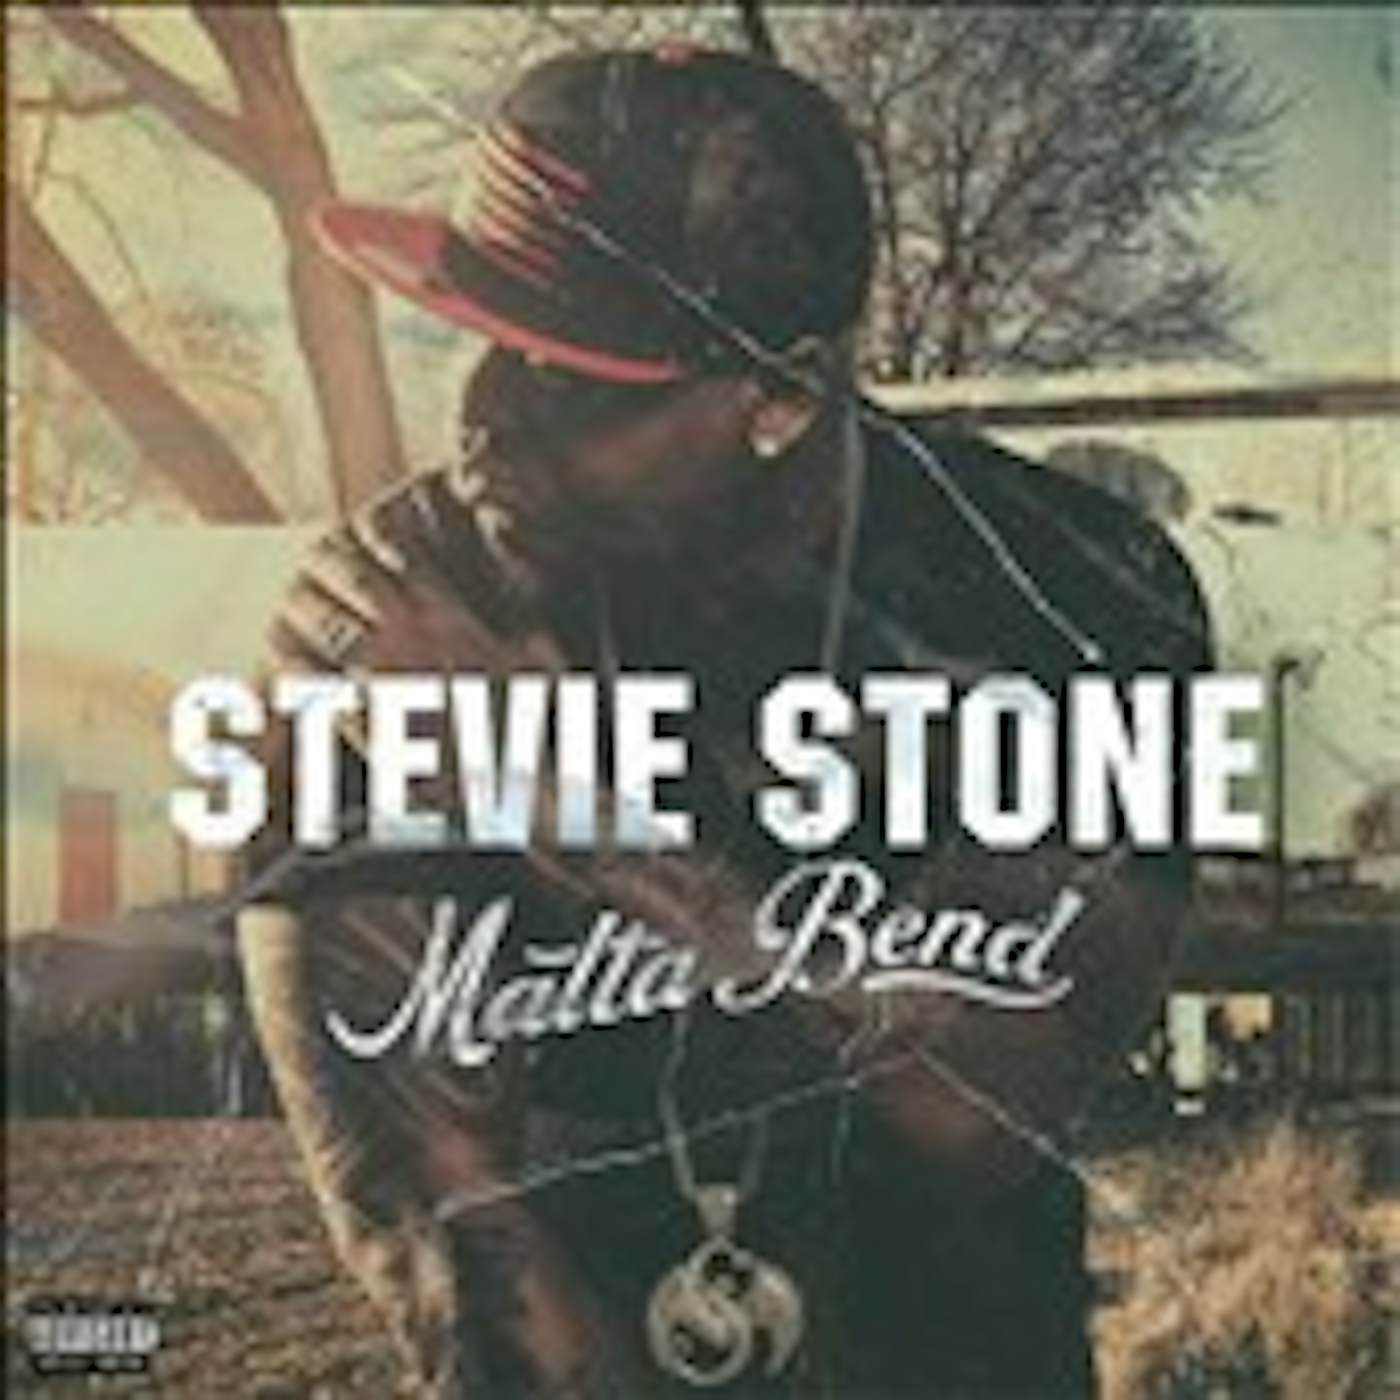 Stevie Stone MALTA BEND CD